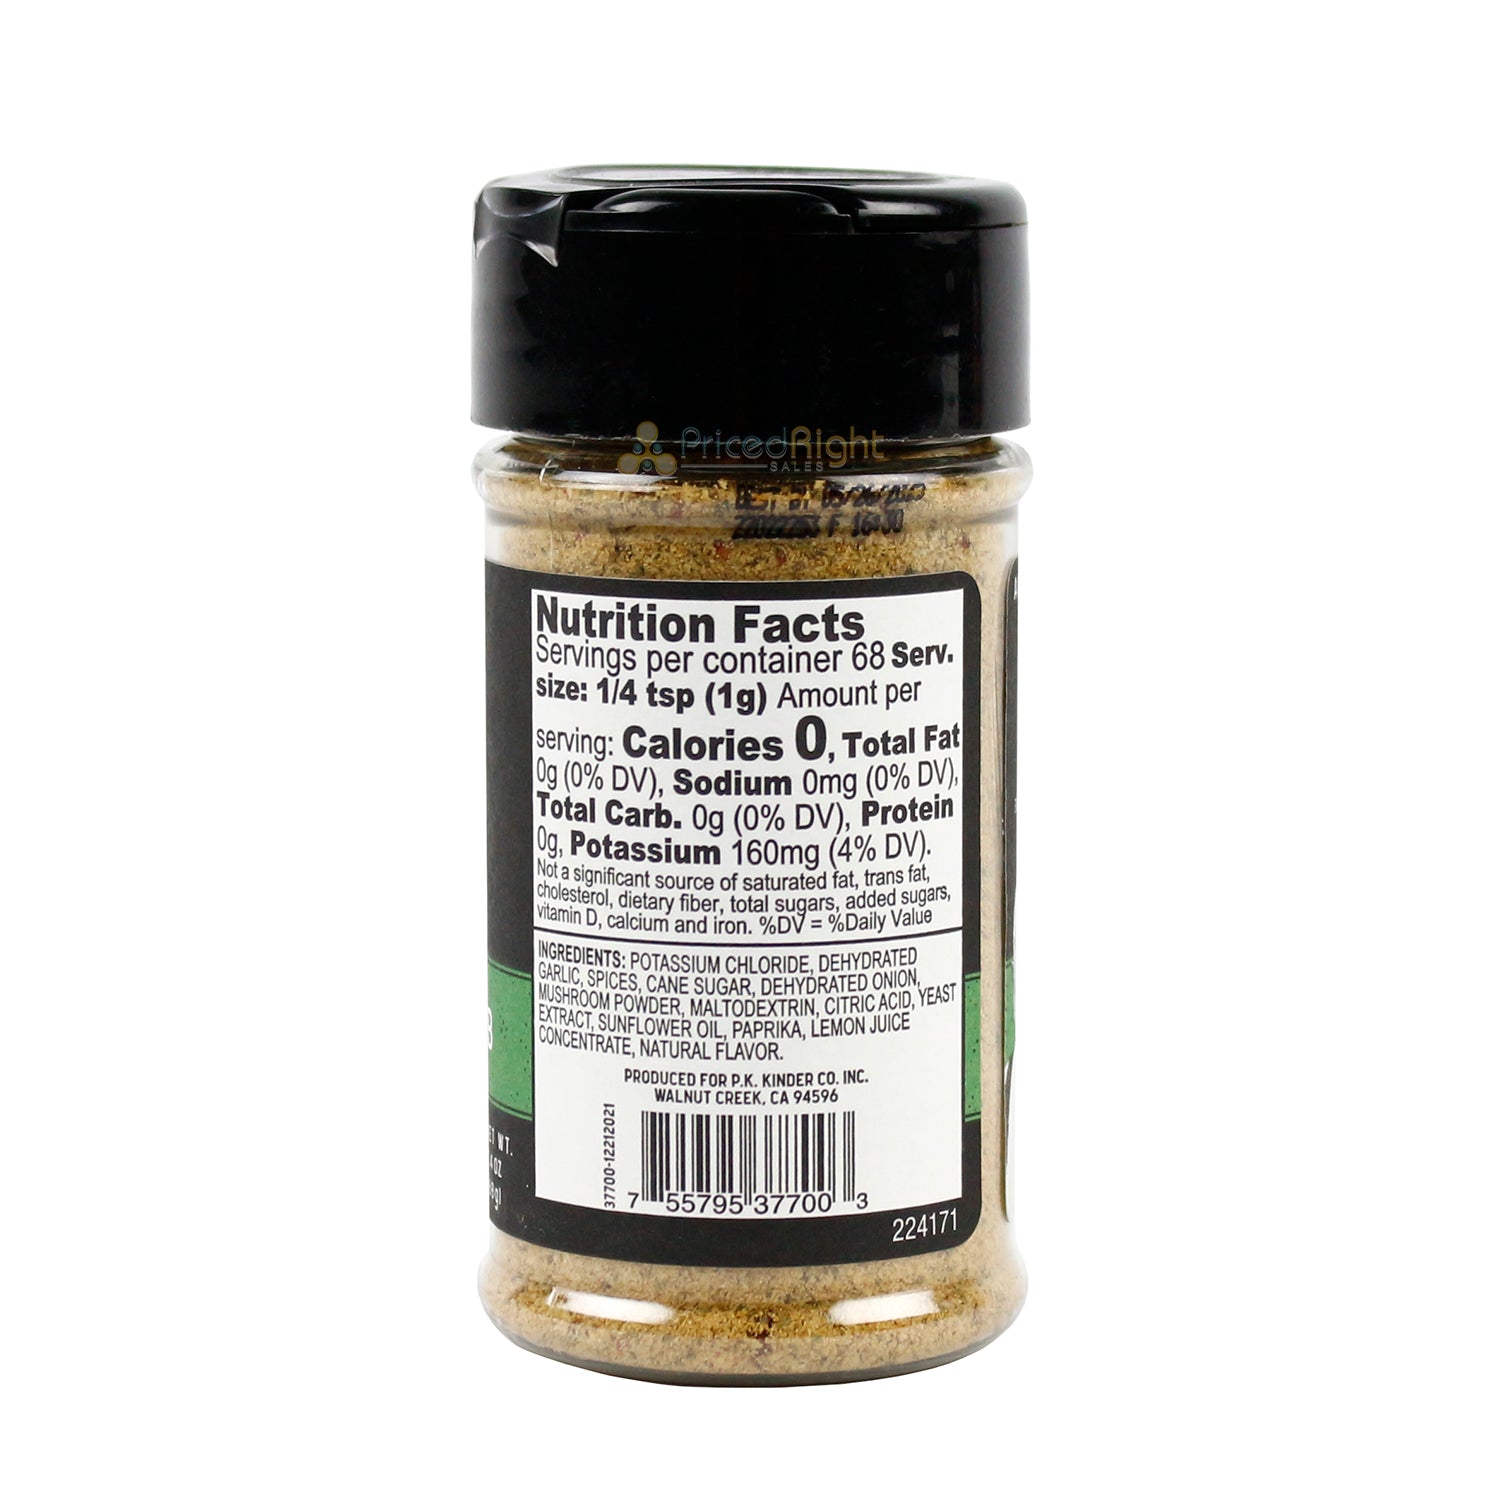 Kinder's No Salt Garlic & Herb Handcrafted Seasoning Dry Rub No MSG 2.4 oz